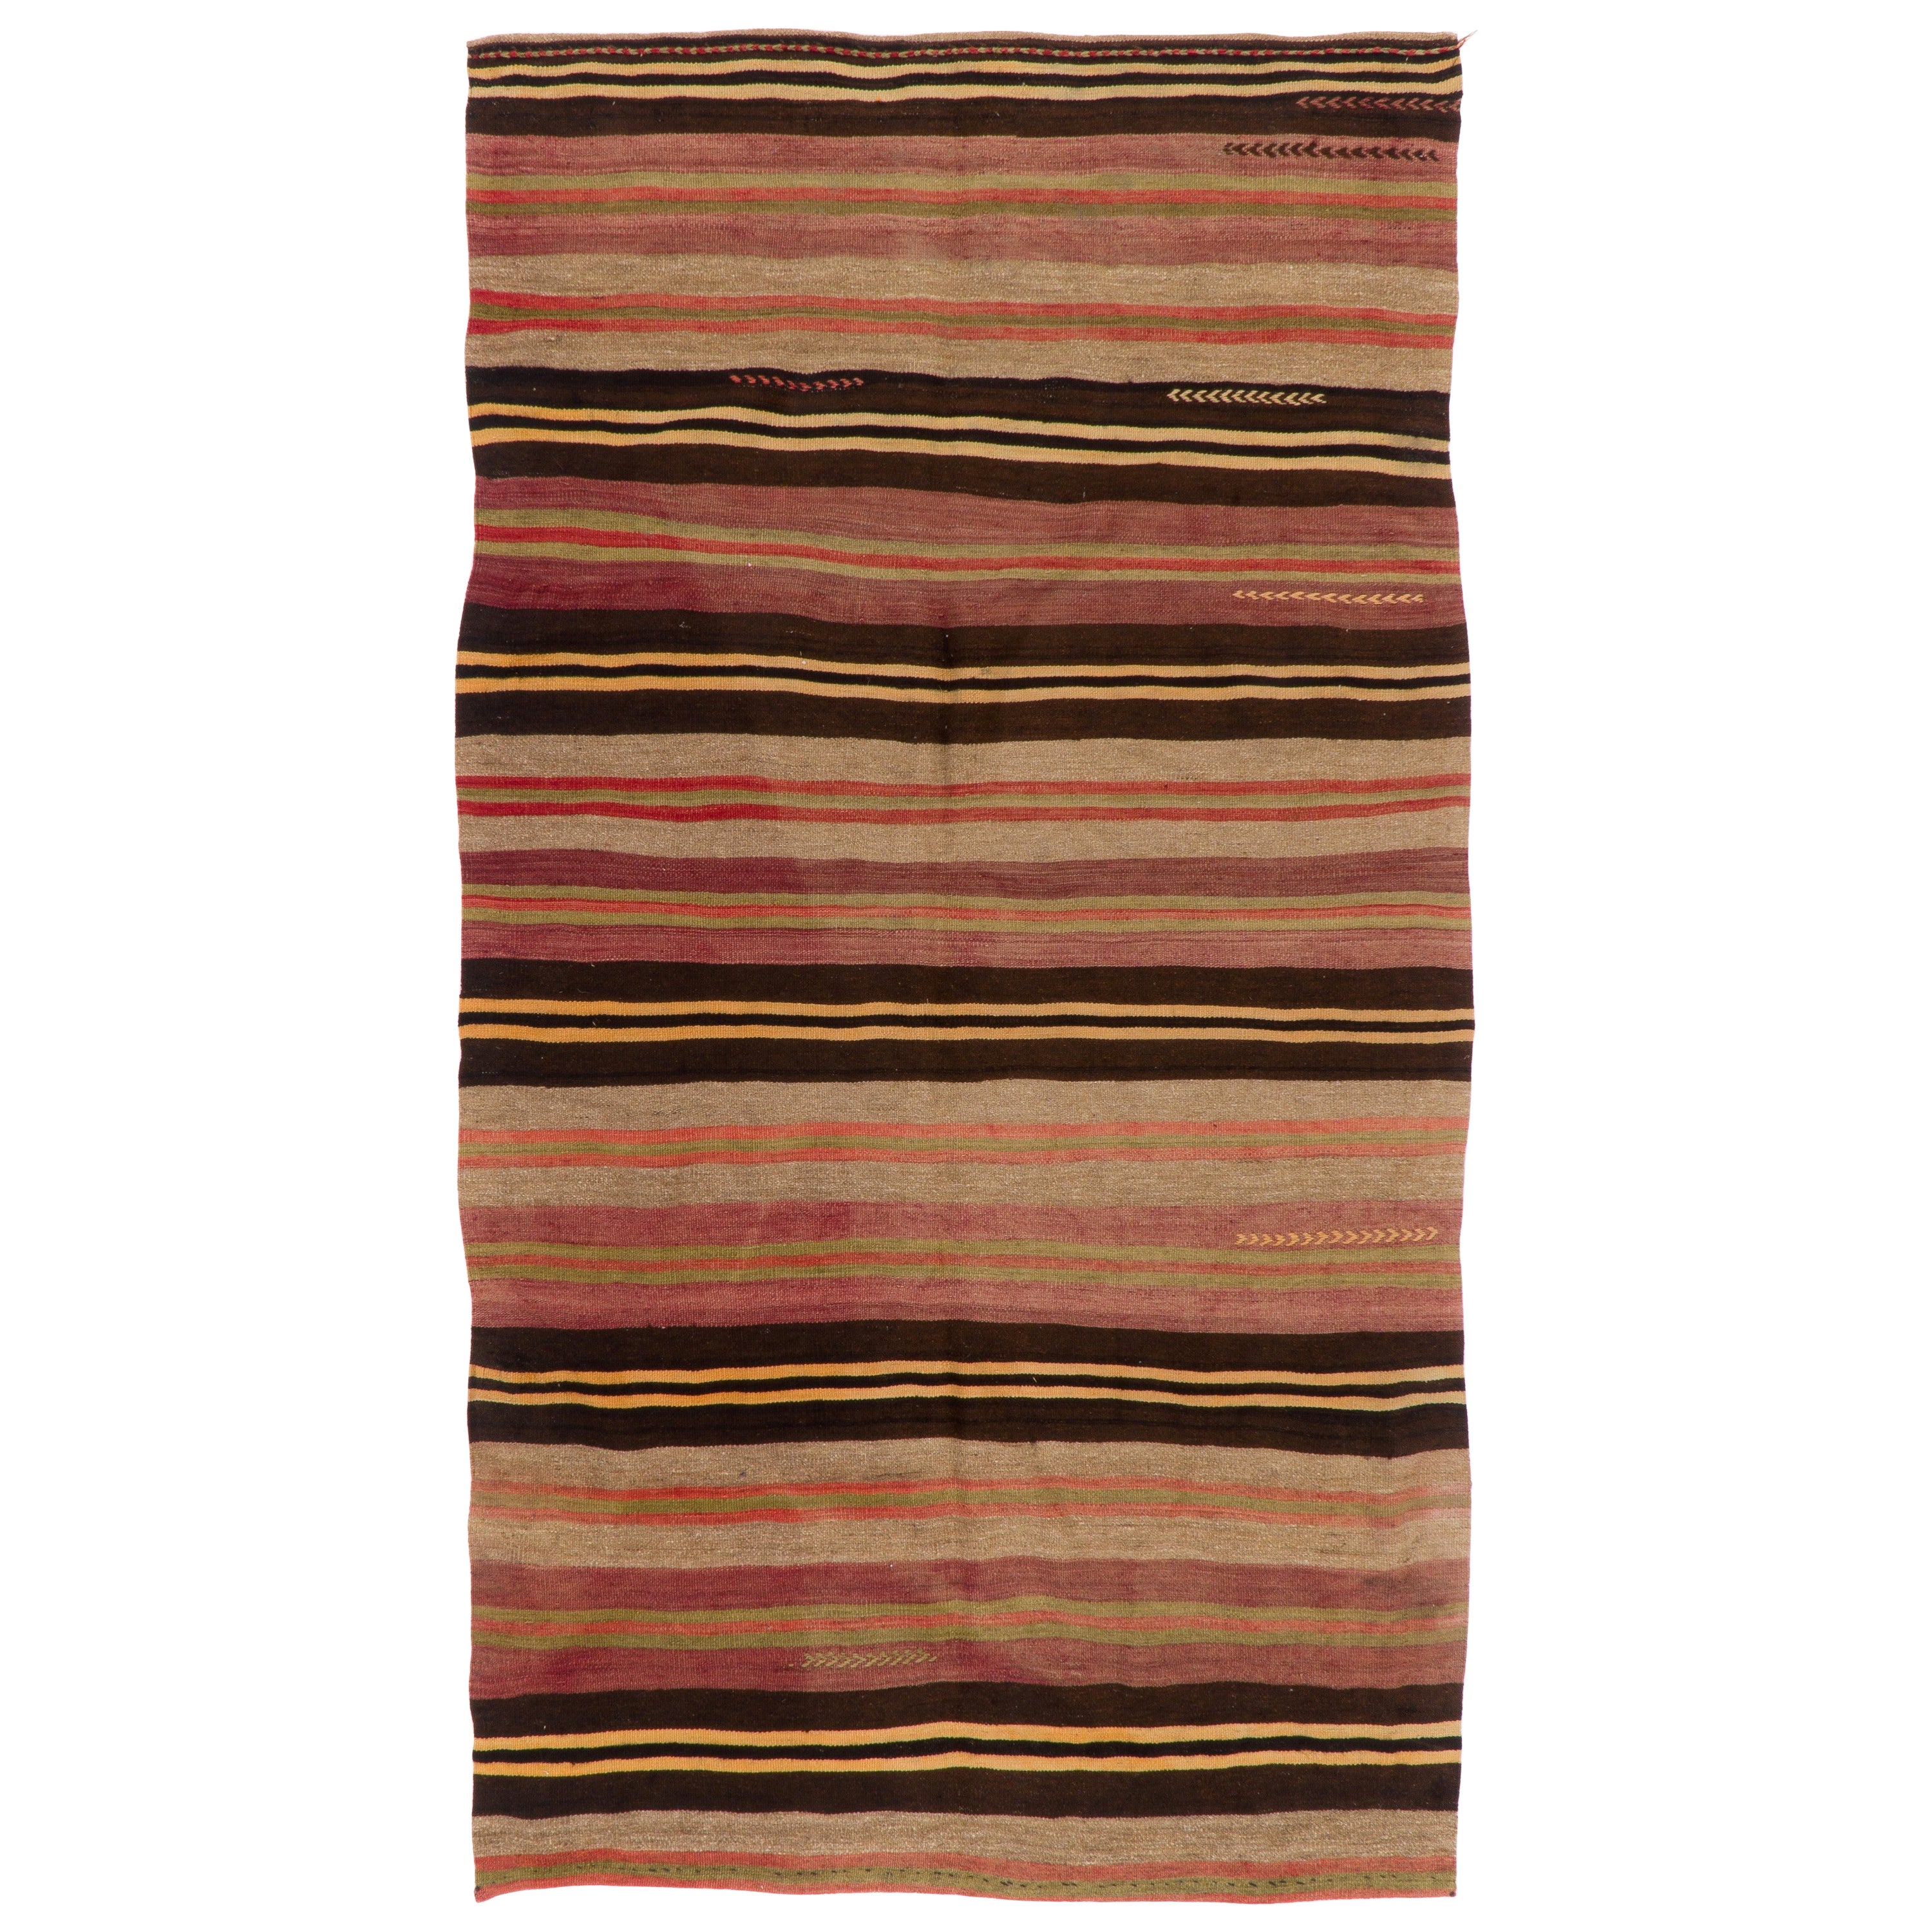 5x9.6 Ft Hand Woven Vintage Striped Anatolian Kilim 'Flat-Weave', 100% Wool